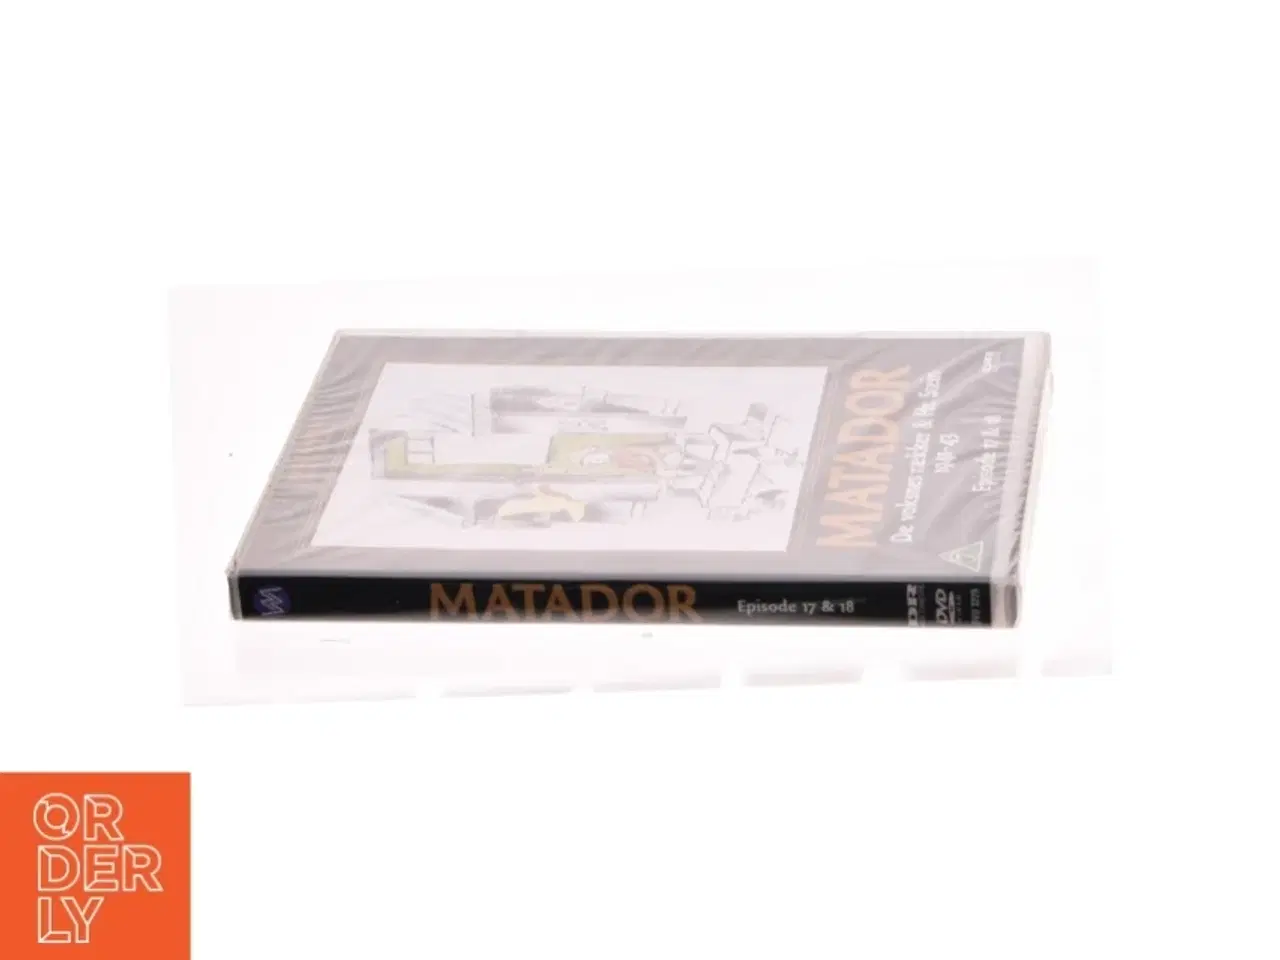 Billede 3 - MATADOR 09 (EPS. 17+18) fra dvd